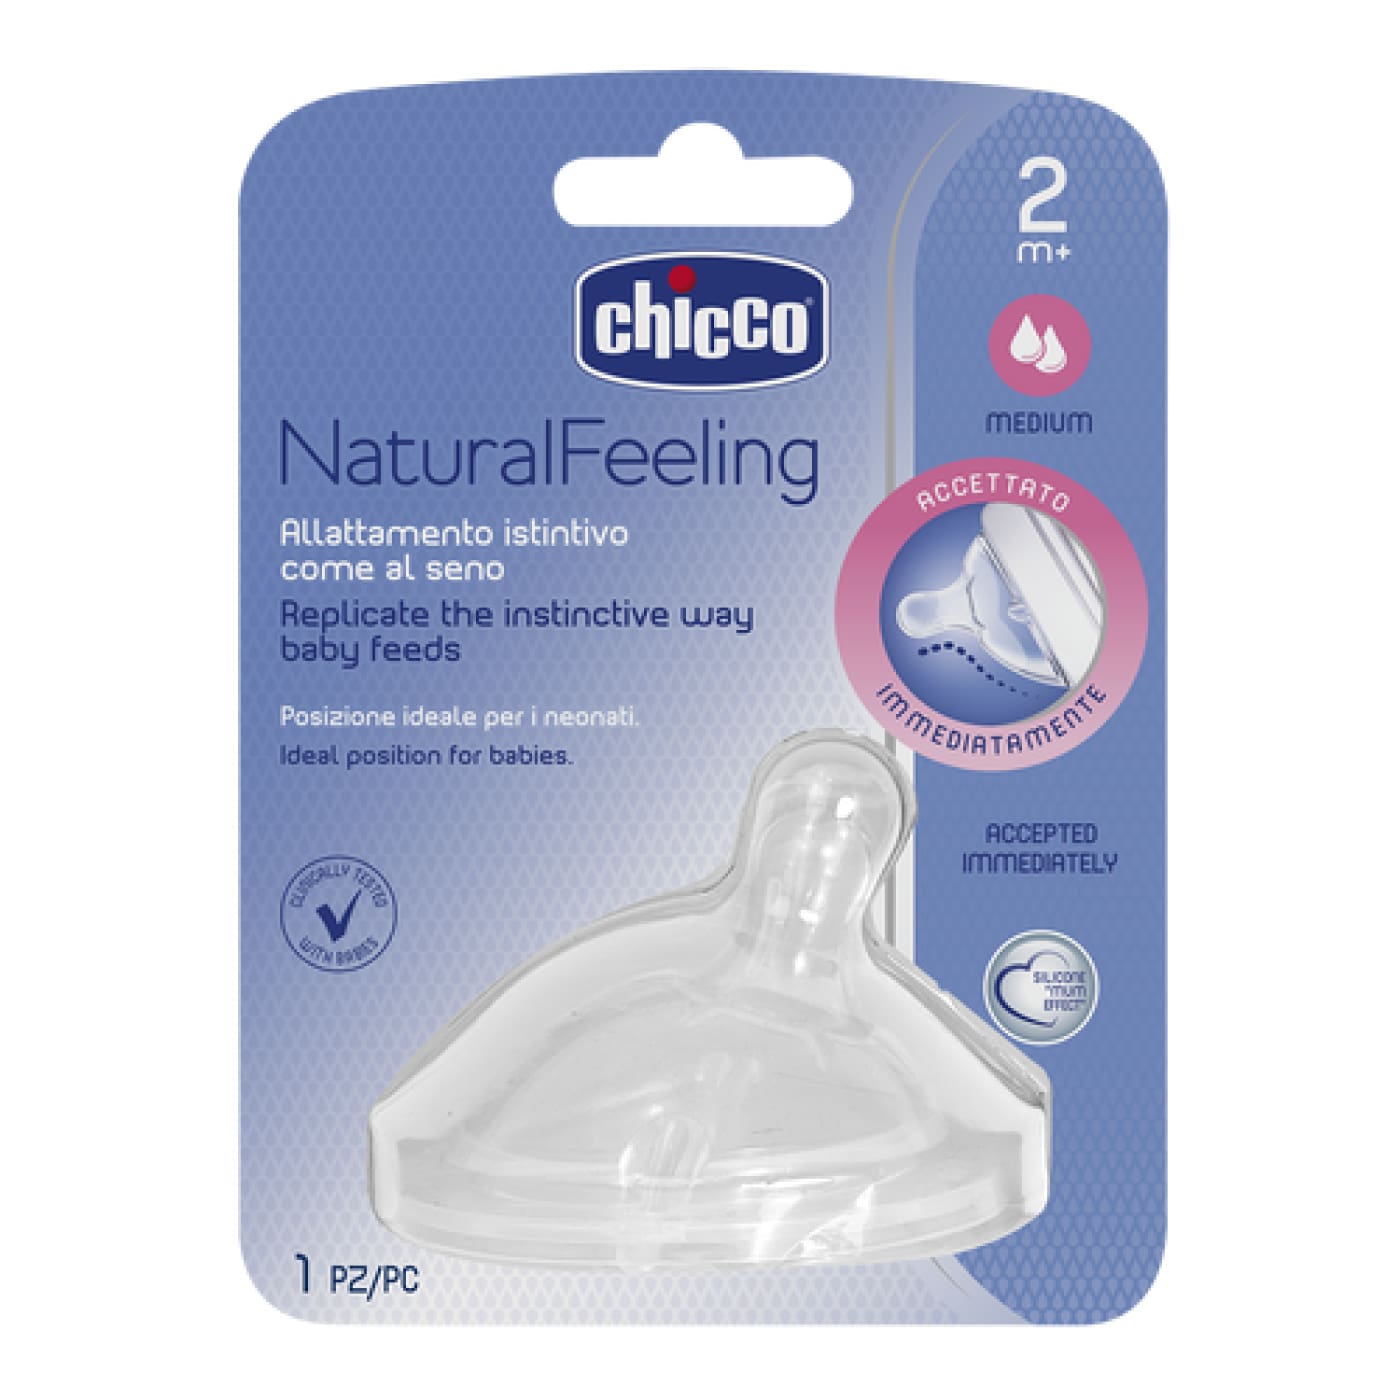 Chicco Natural Feeling Silicone Teat 2M+ - Medium Flow - NURSING & FEEDING - BOTTLE ACCESSORIES